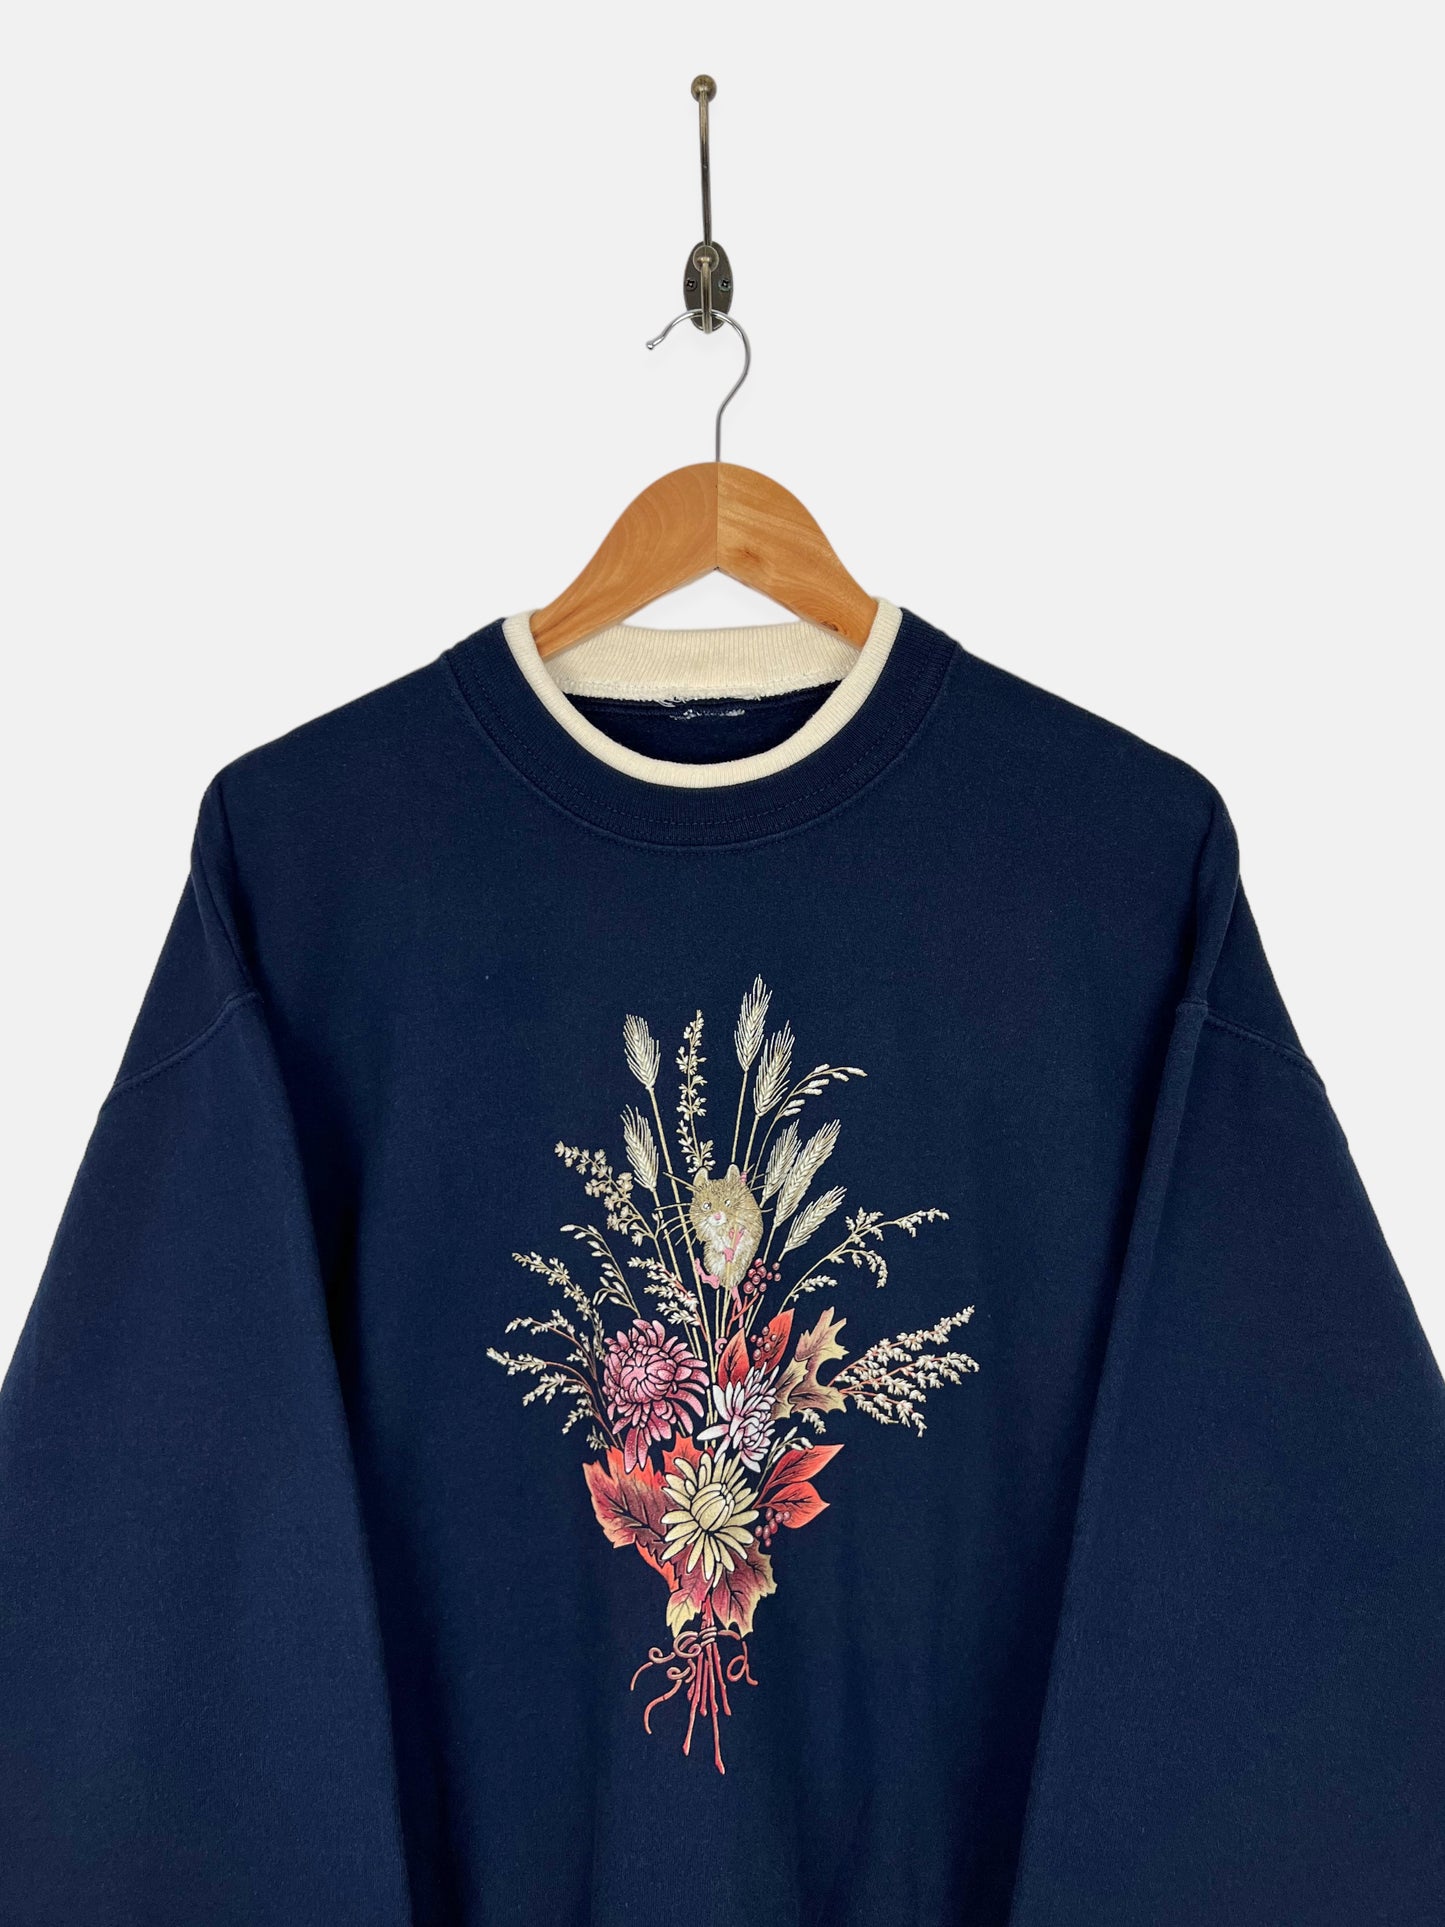 90's Flowers Vintage Sweatshirt Size M